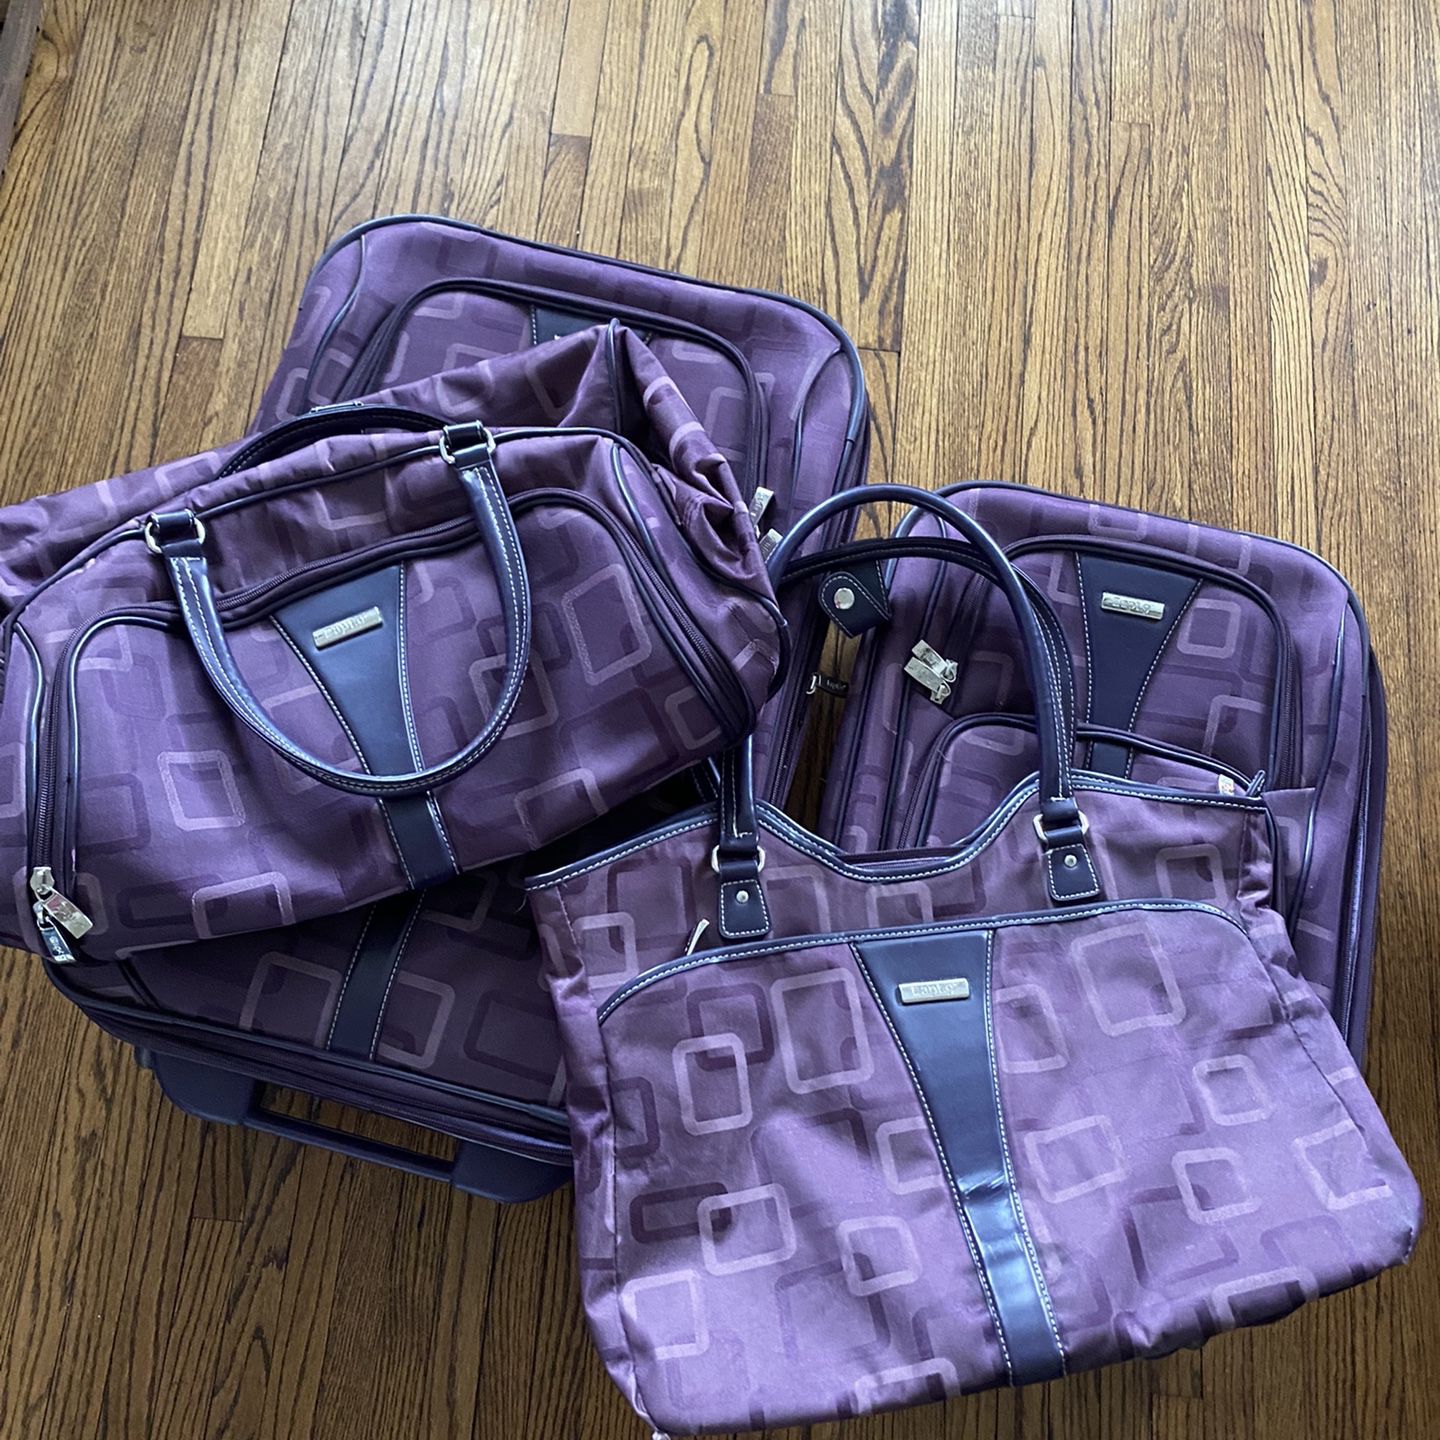 Apt 9. Purple Geometry Luggage Set for Sale in Ottawa, IL - OfferUp